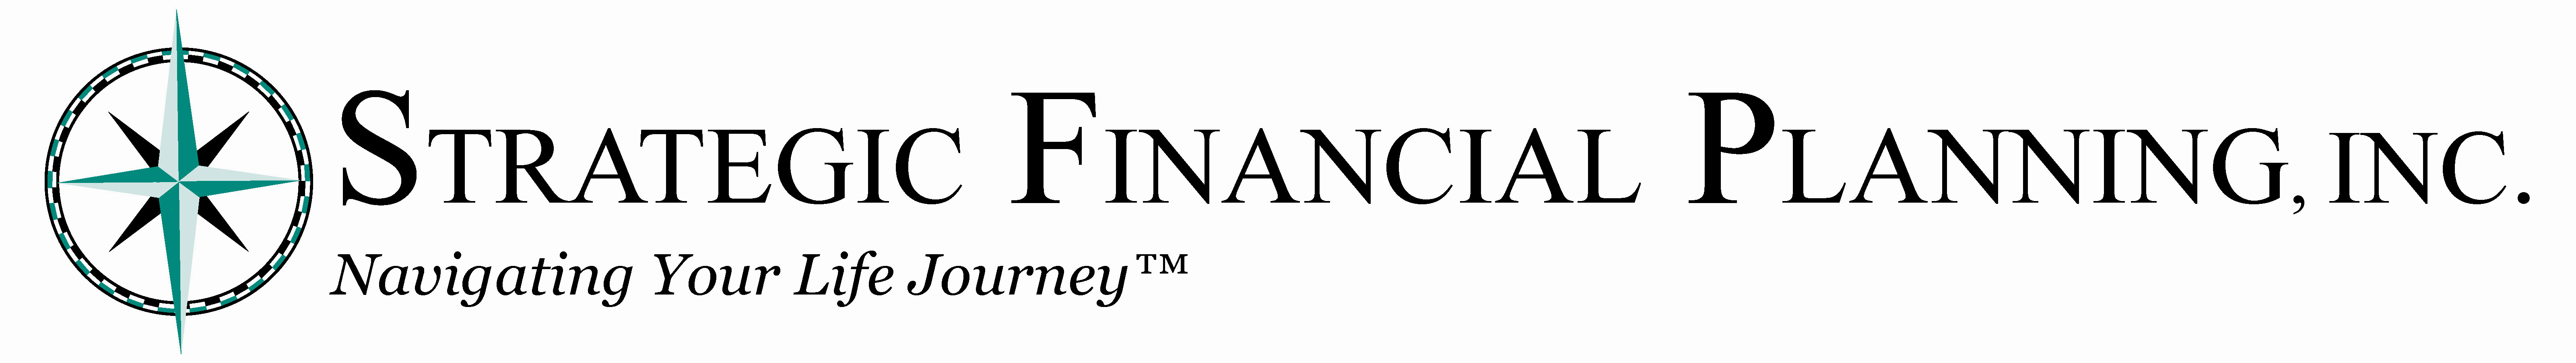 Strategic Financial Planning, Inc.